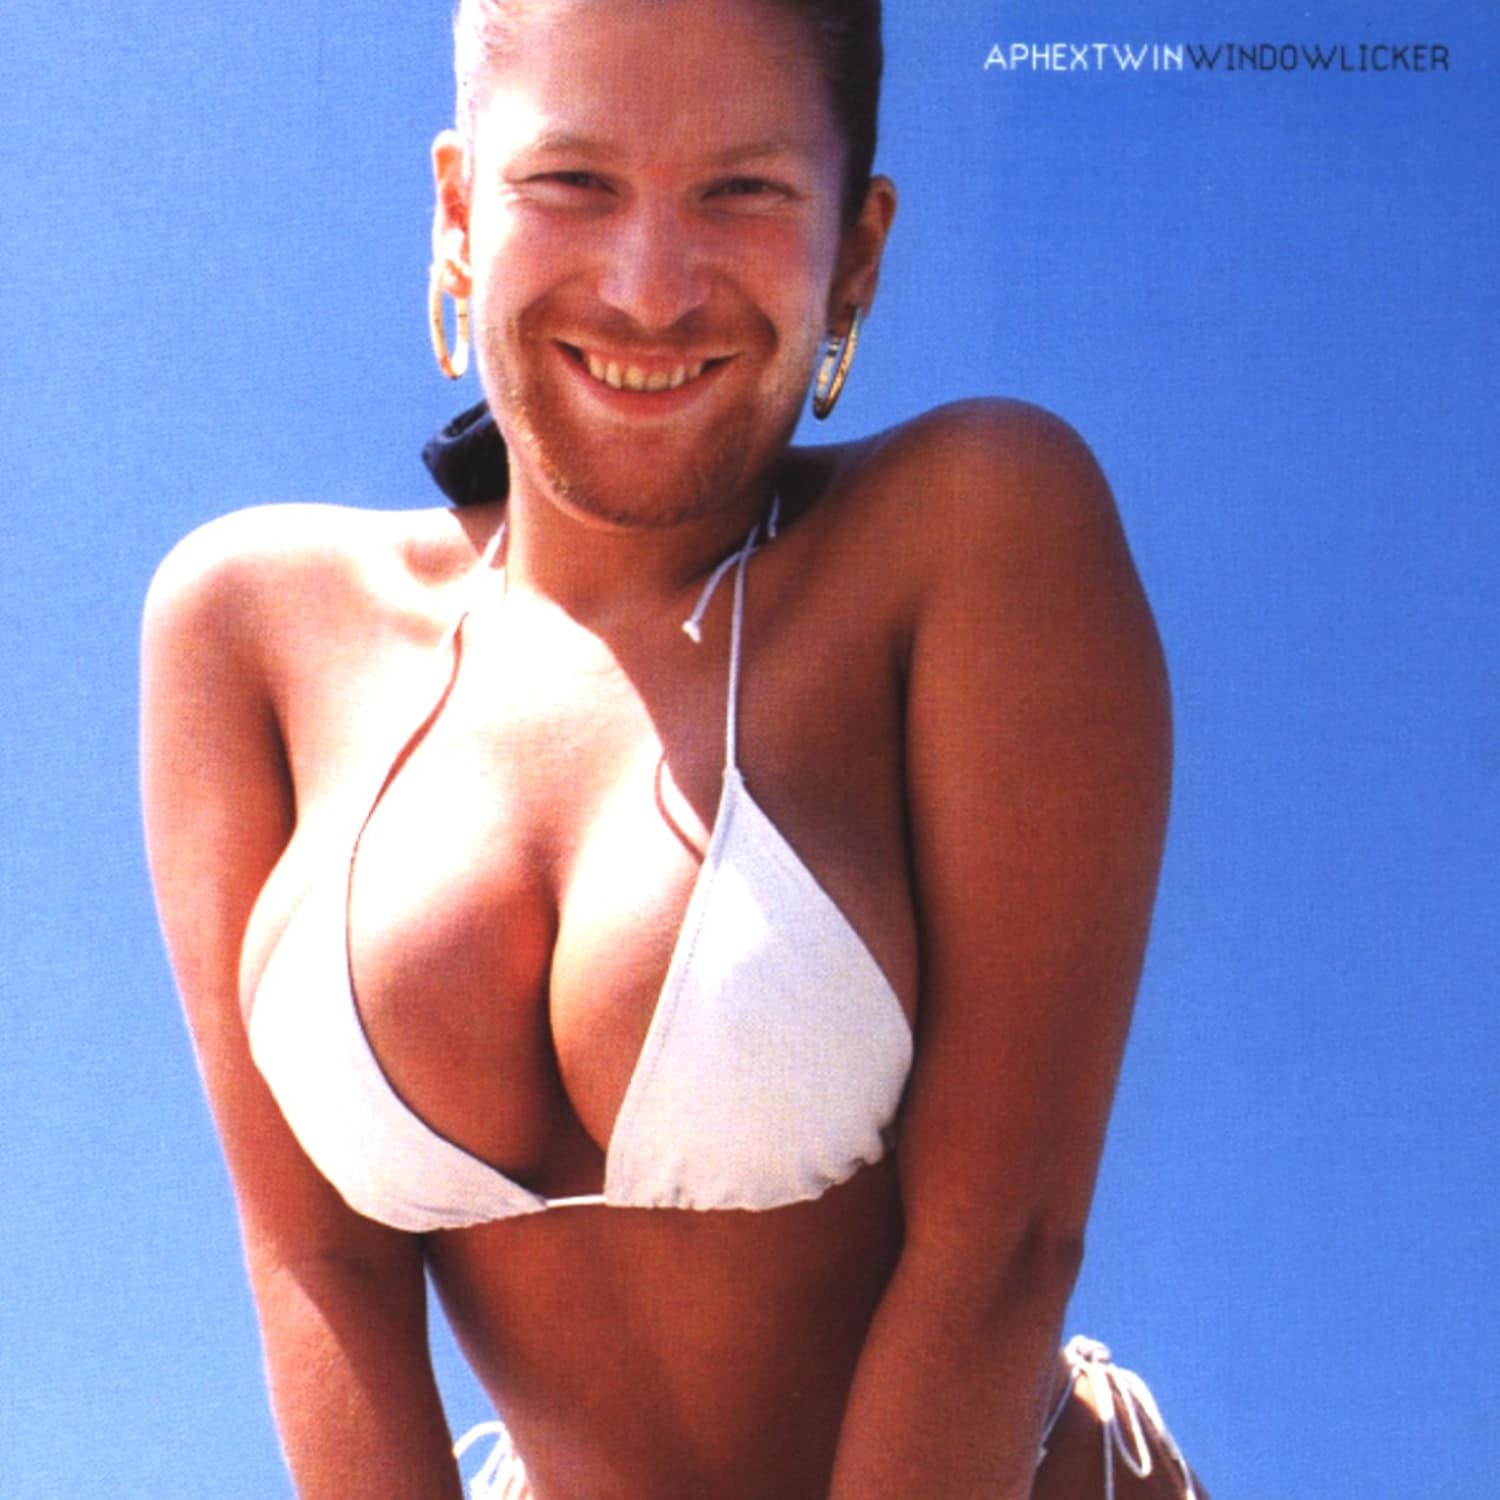 Aphex Twin - WINDOWLICKER